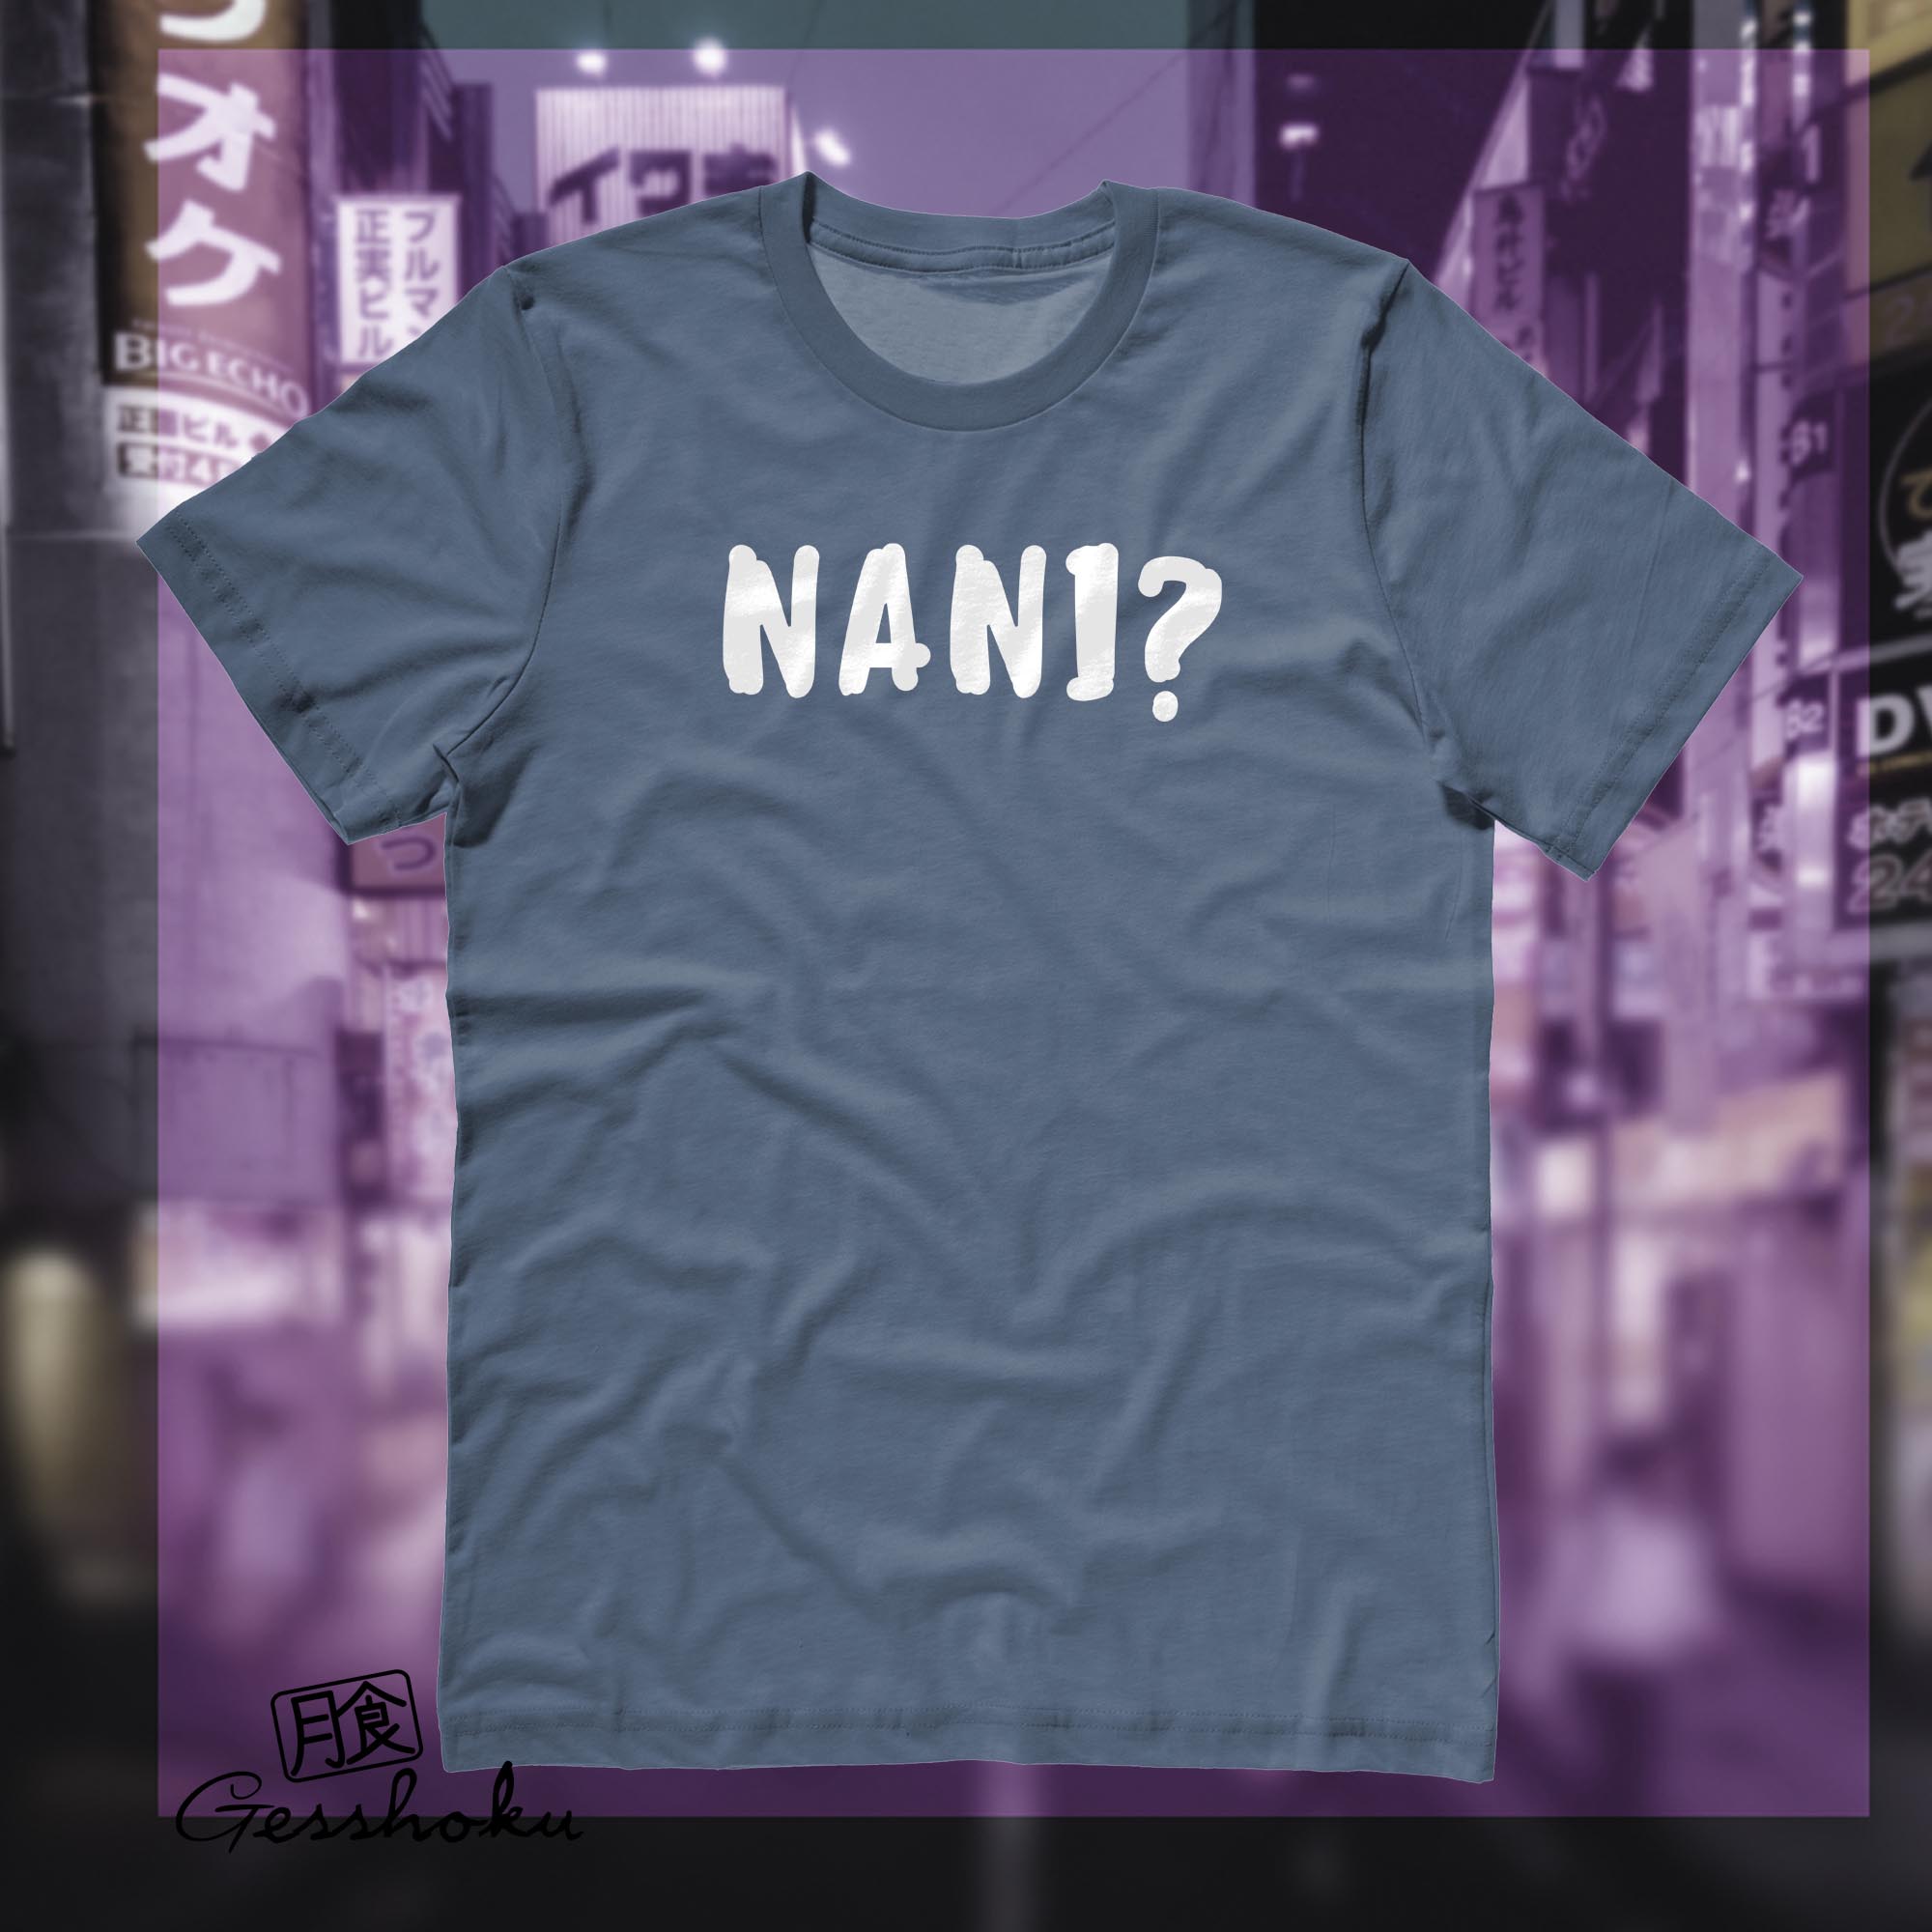 Nani? T-shirt (text version) - Steel Blue